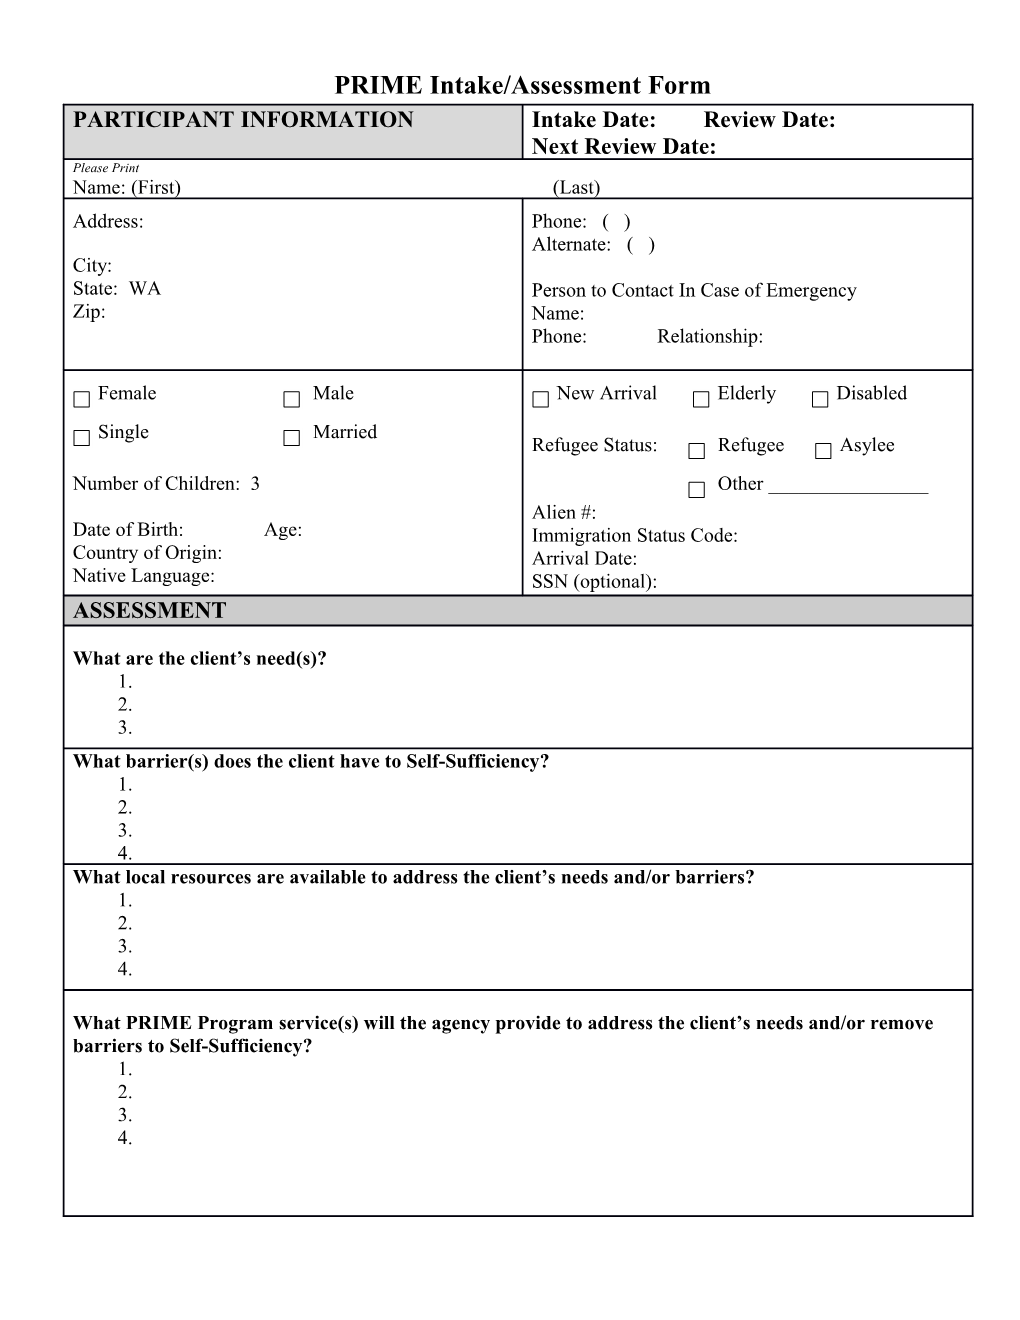 PRIME Intake/Assessment Form